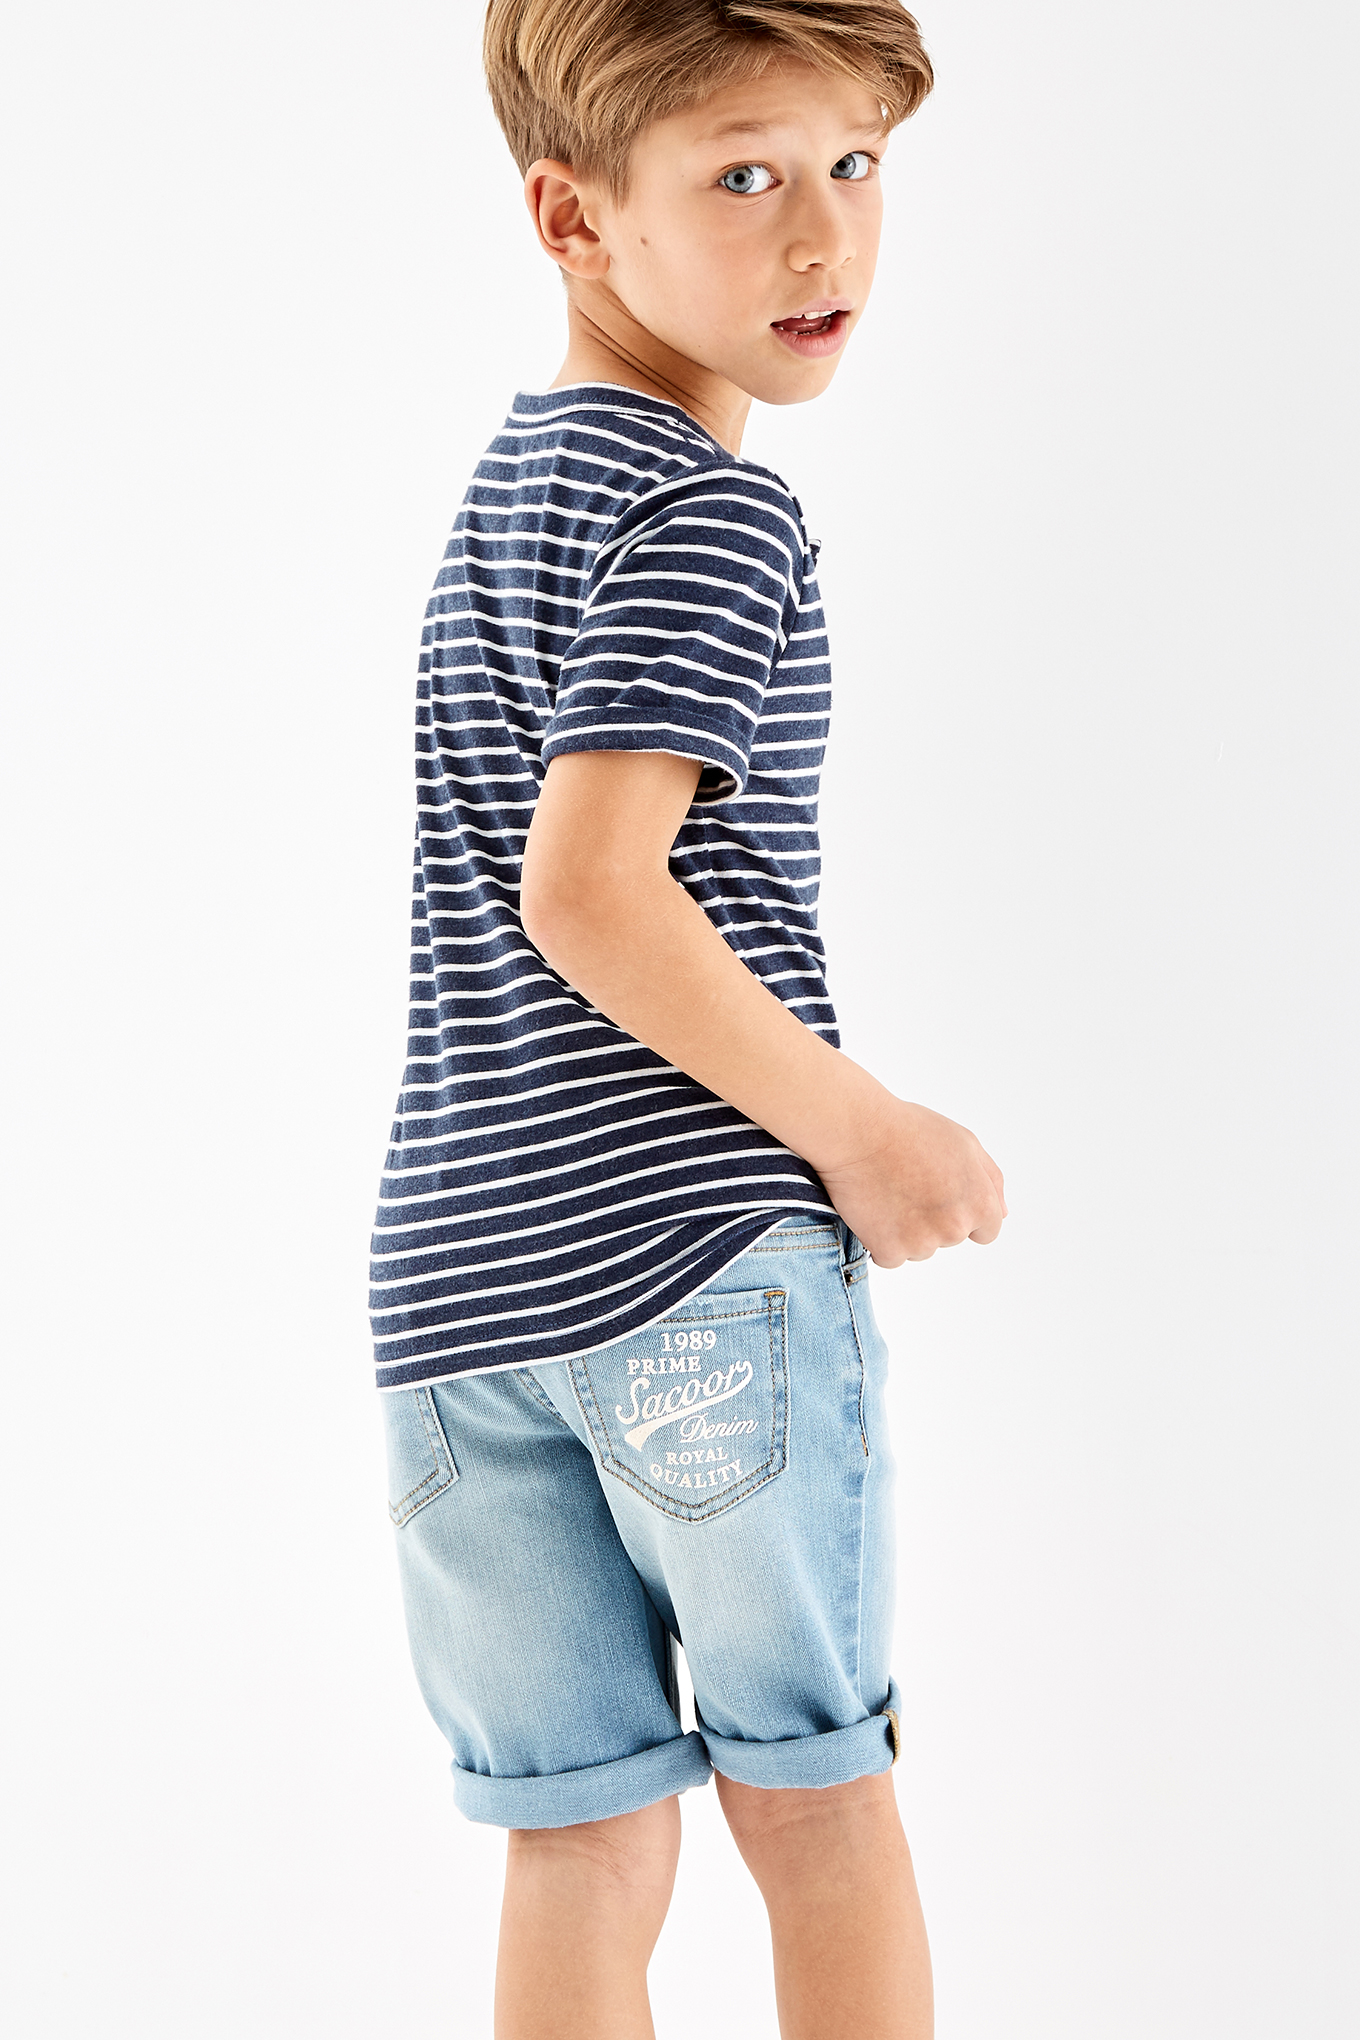 T-Shirt Stripes Sport Boy